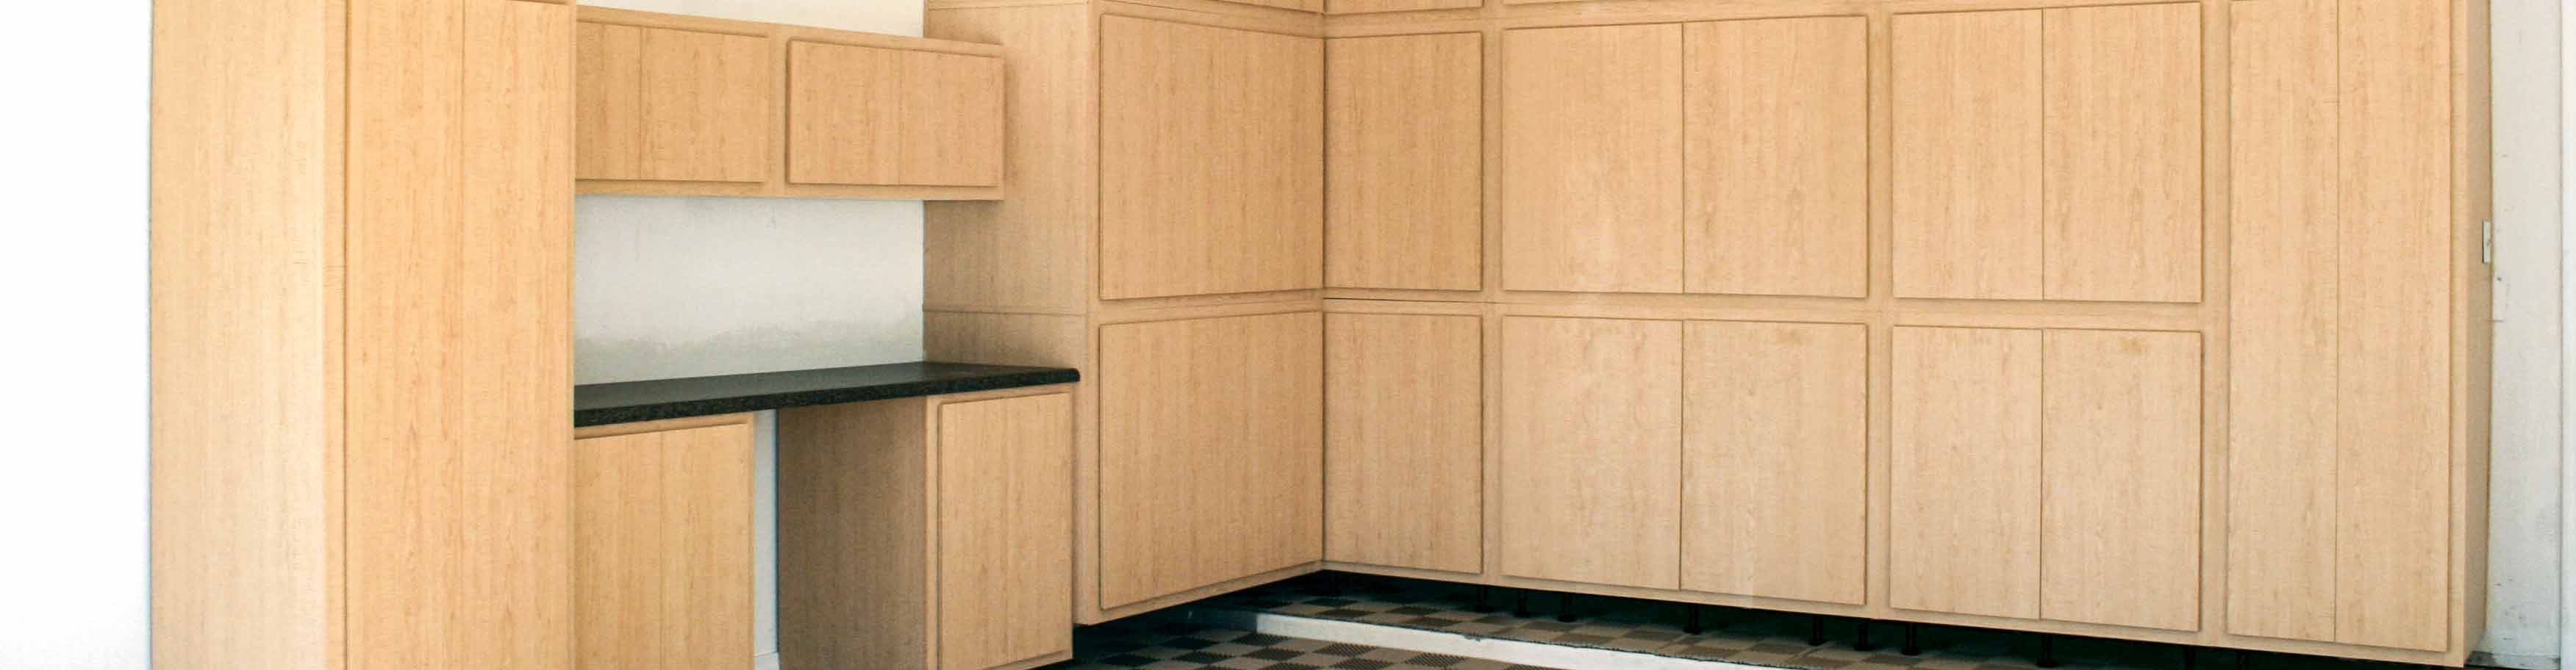 Simple DIY Garage Storage Cabinets